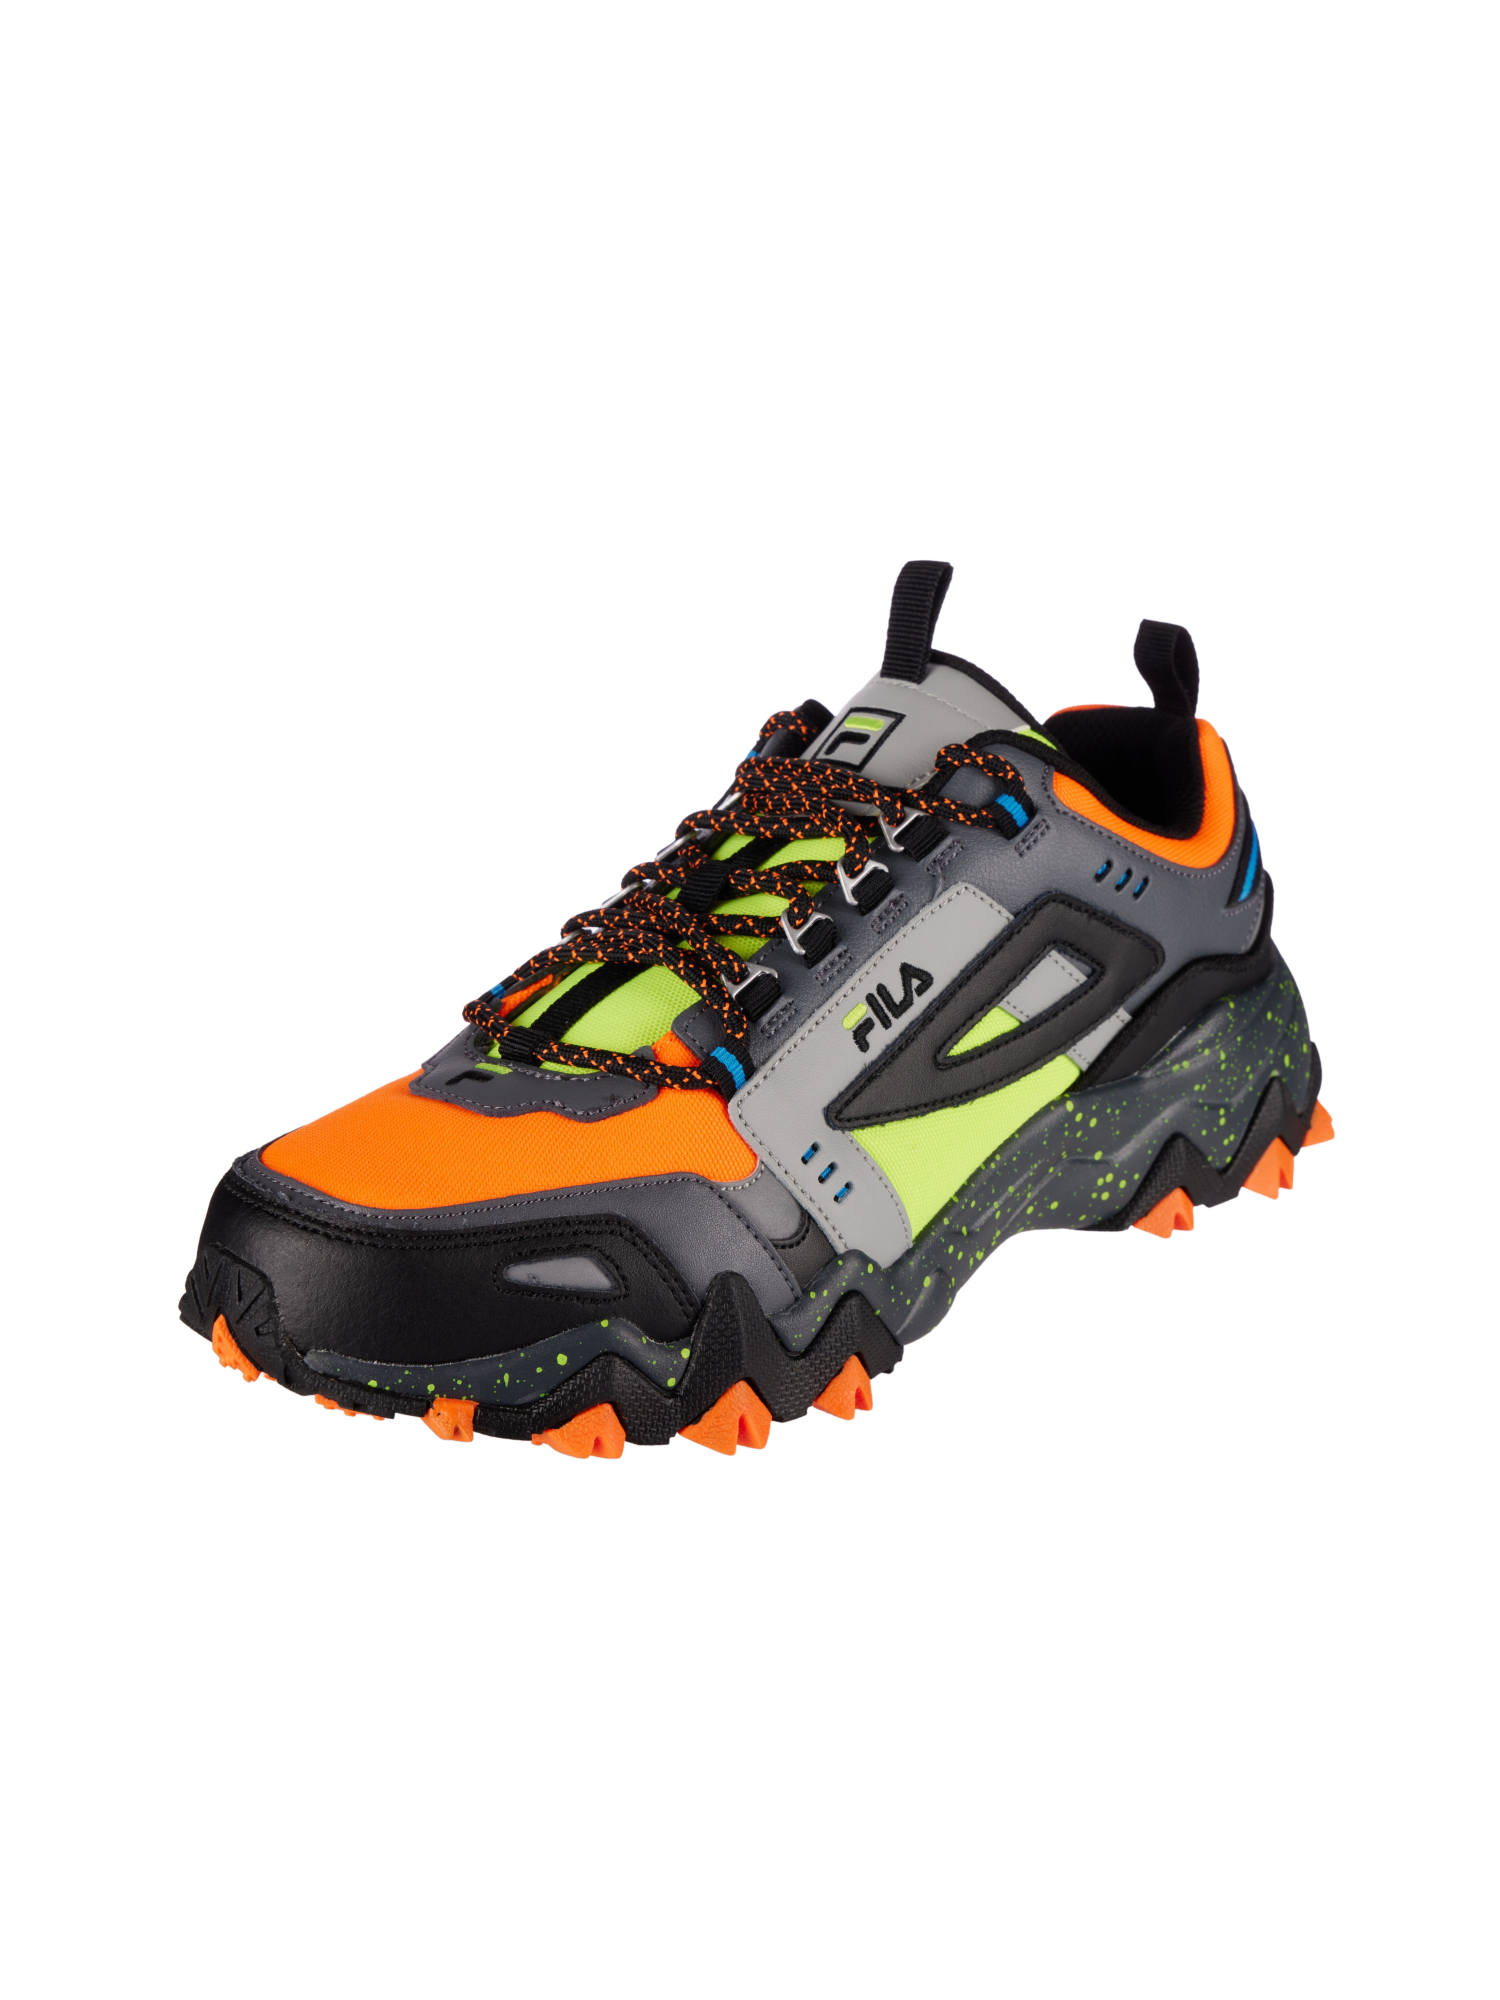 Fila Men's Shor/Blk/Sfty Oakmont Trail Running Shoes - 11M - Walmart.com